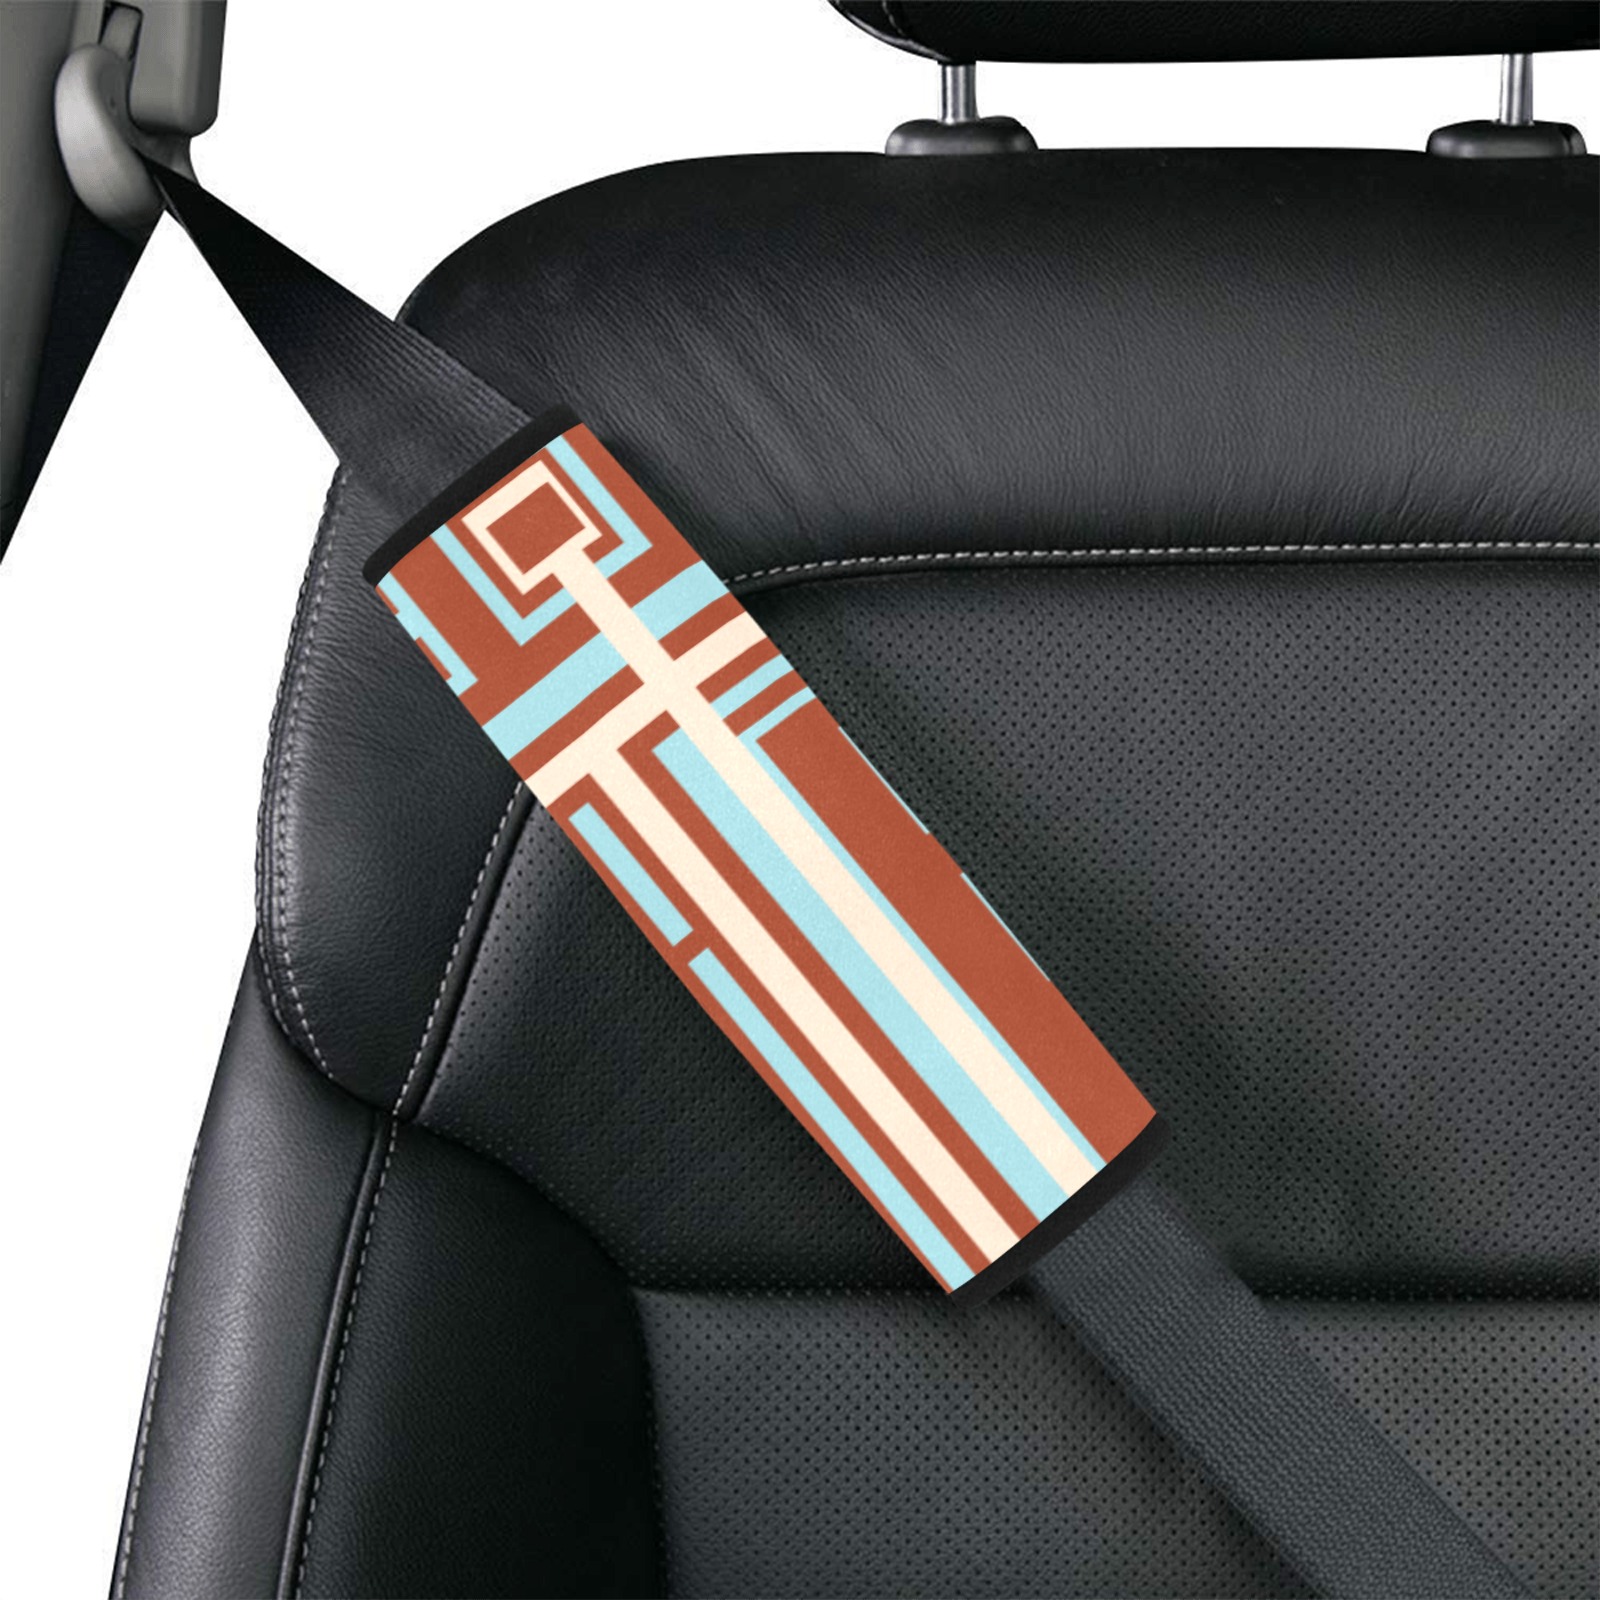 Model 1 Car Seat Belt Cover 7''x8.5''